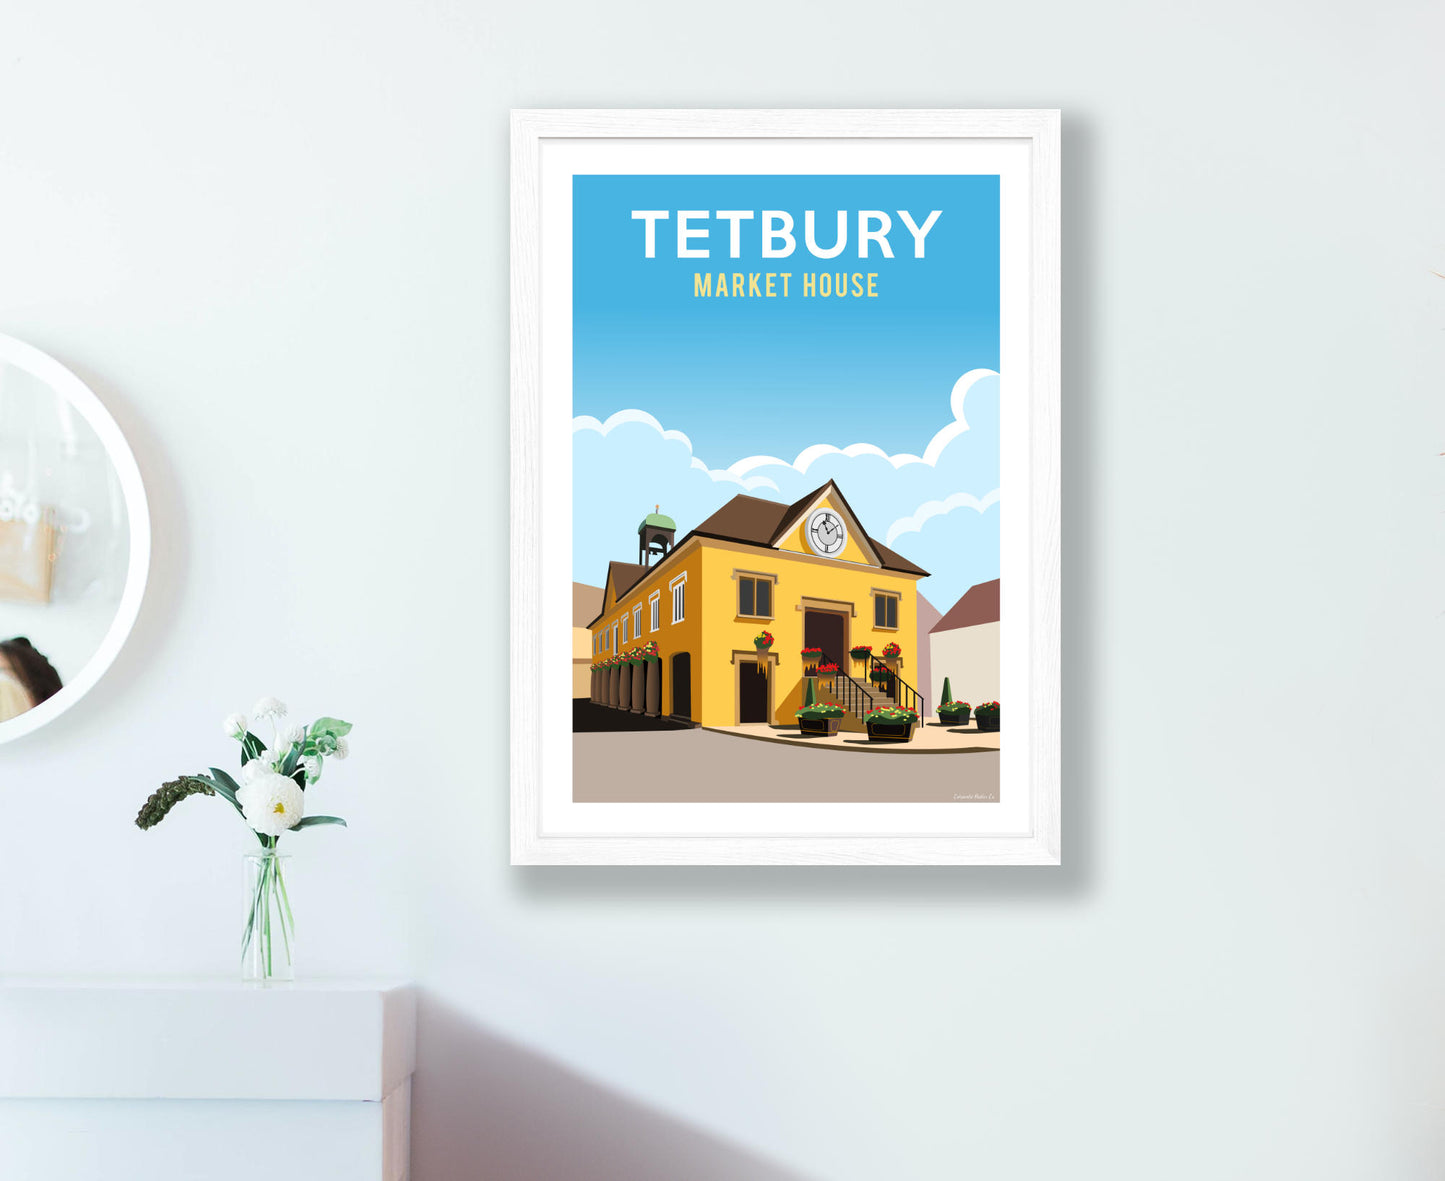 Tetbury Market House Poster in white frame